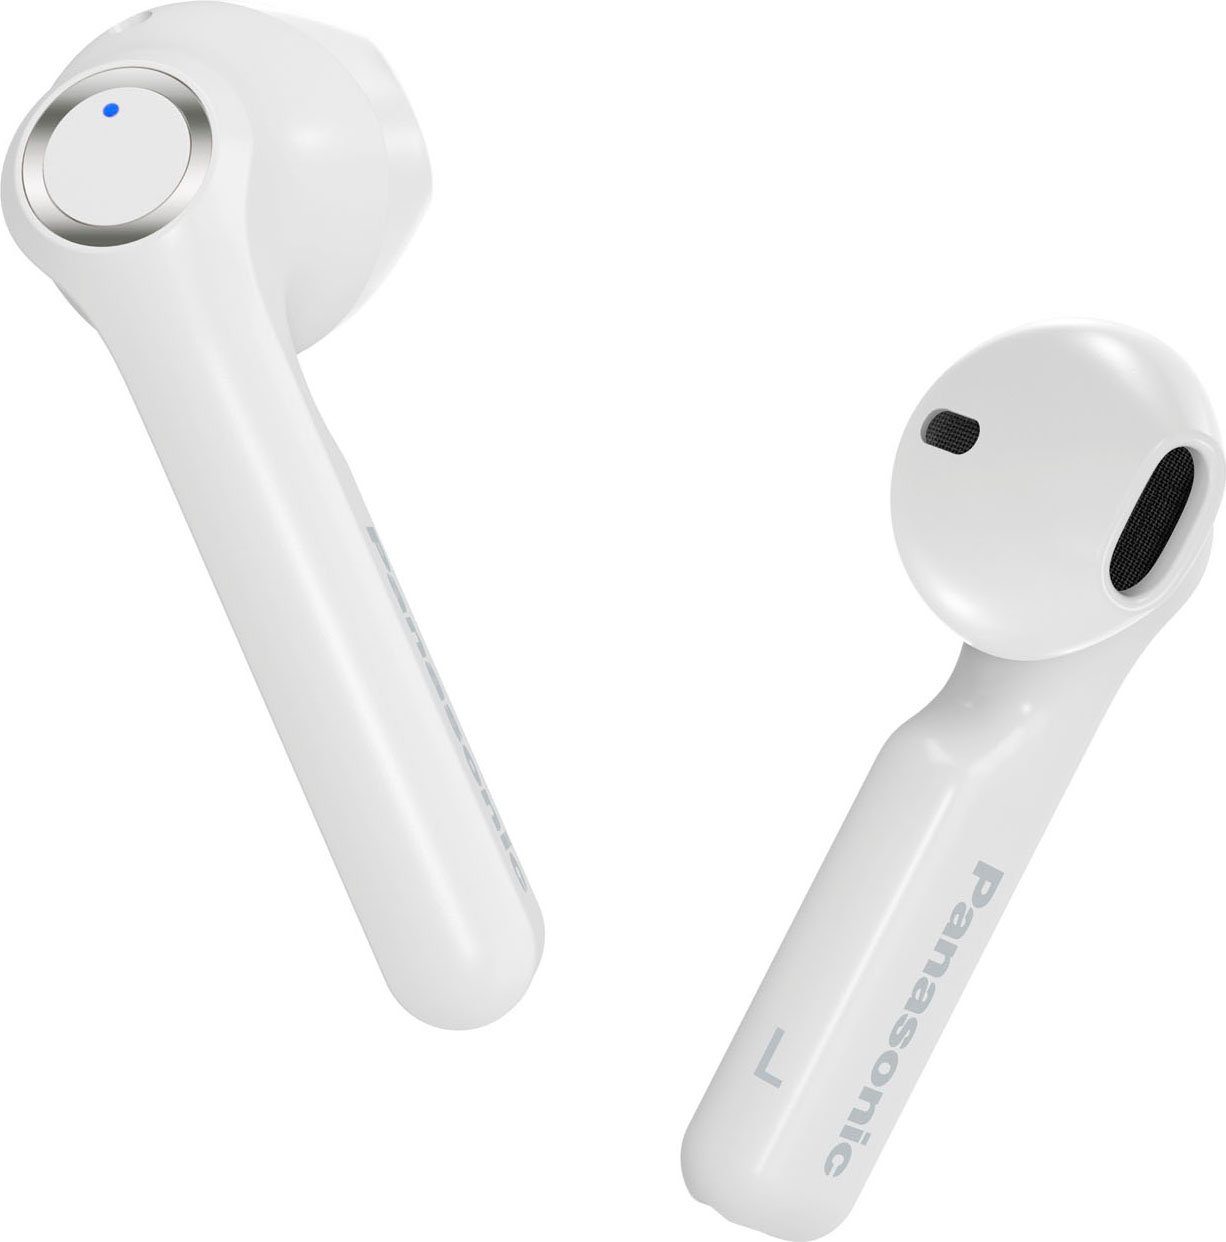 Wireless, Kompaktes Panasonic (Earbuds 4h) In-Ear-Kopfhörer (Sprachsteuerung, RZ-B100 wireless True insgesamt 16h Lade-Case – Akkulaufzeit Bietet Bluetooth),